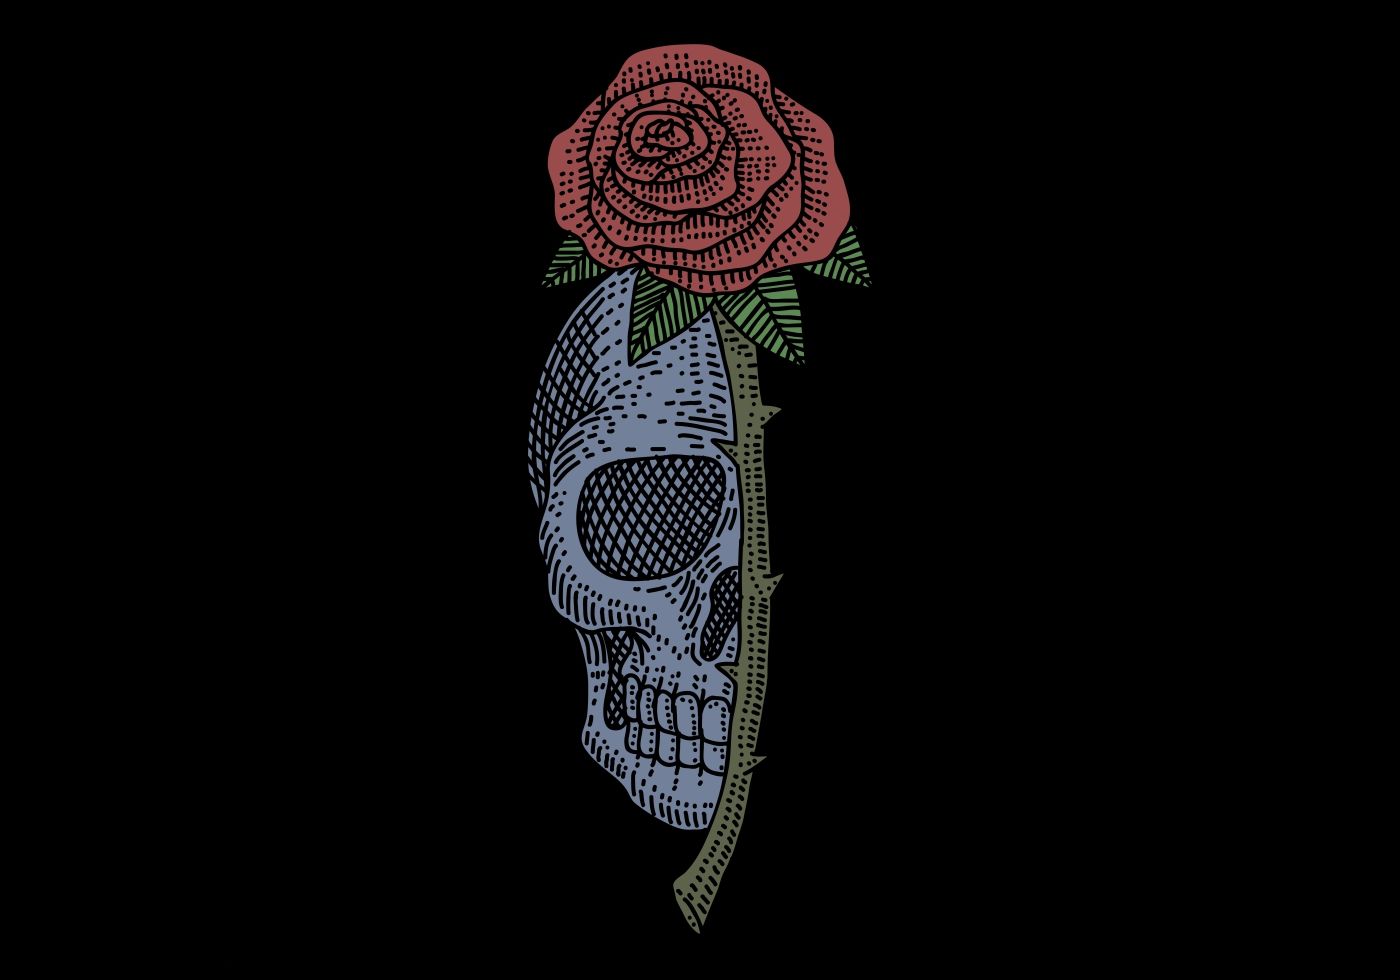 Download Love Skulls and Roses Wallpaper  Wallpaperscom